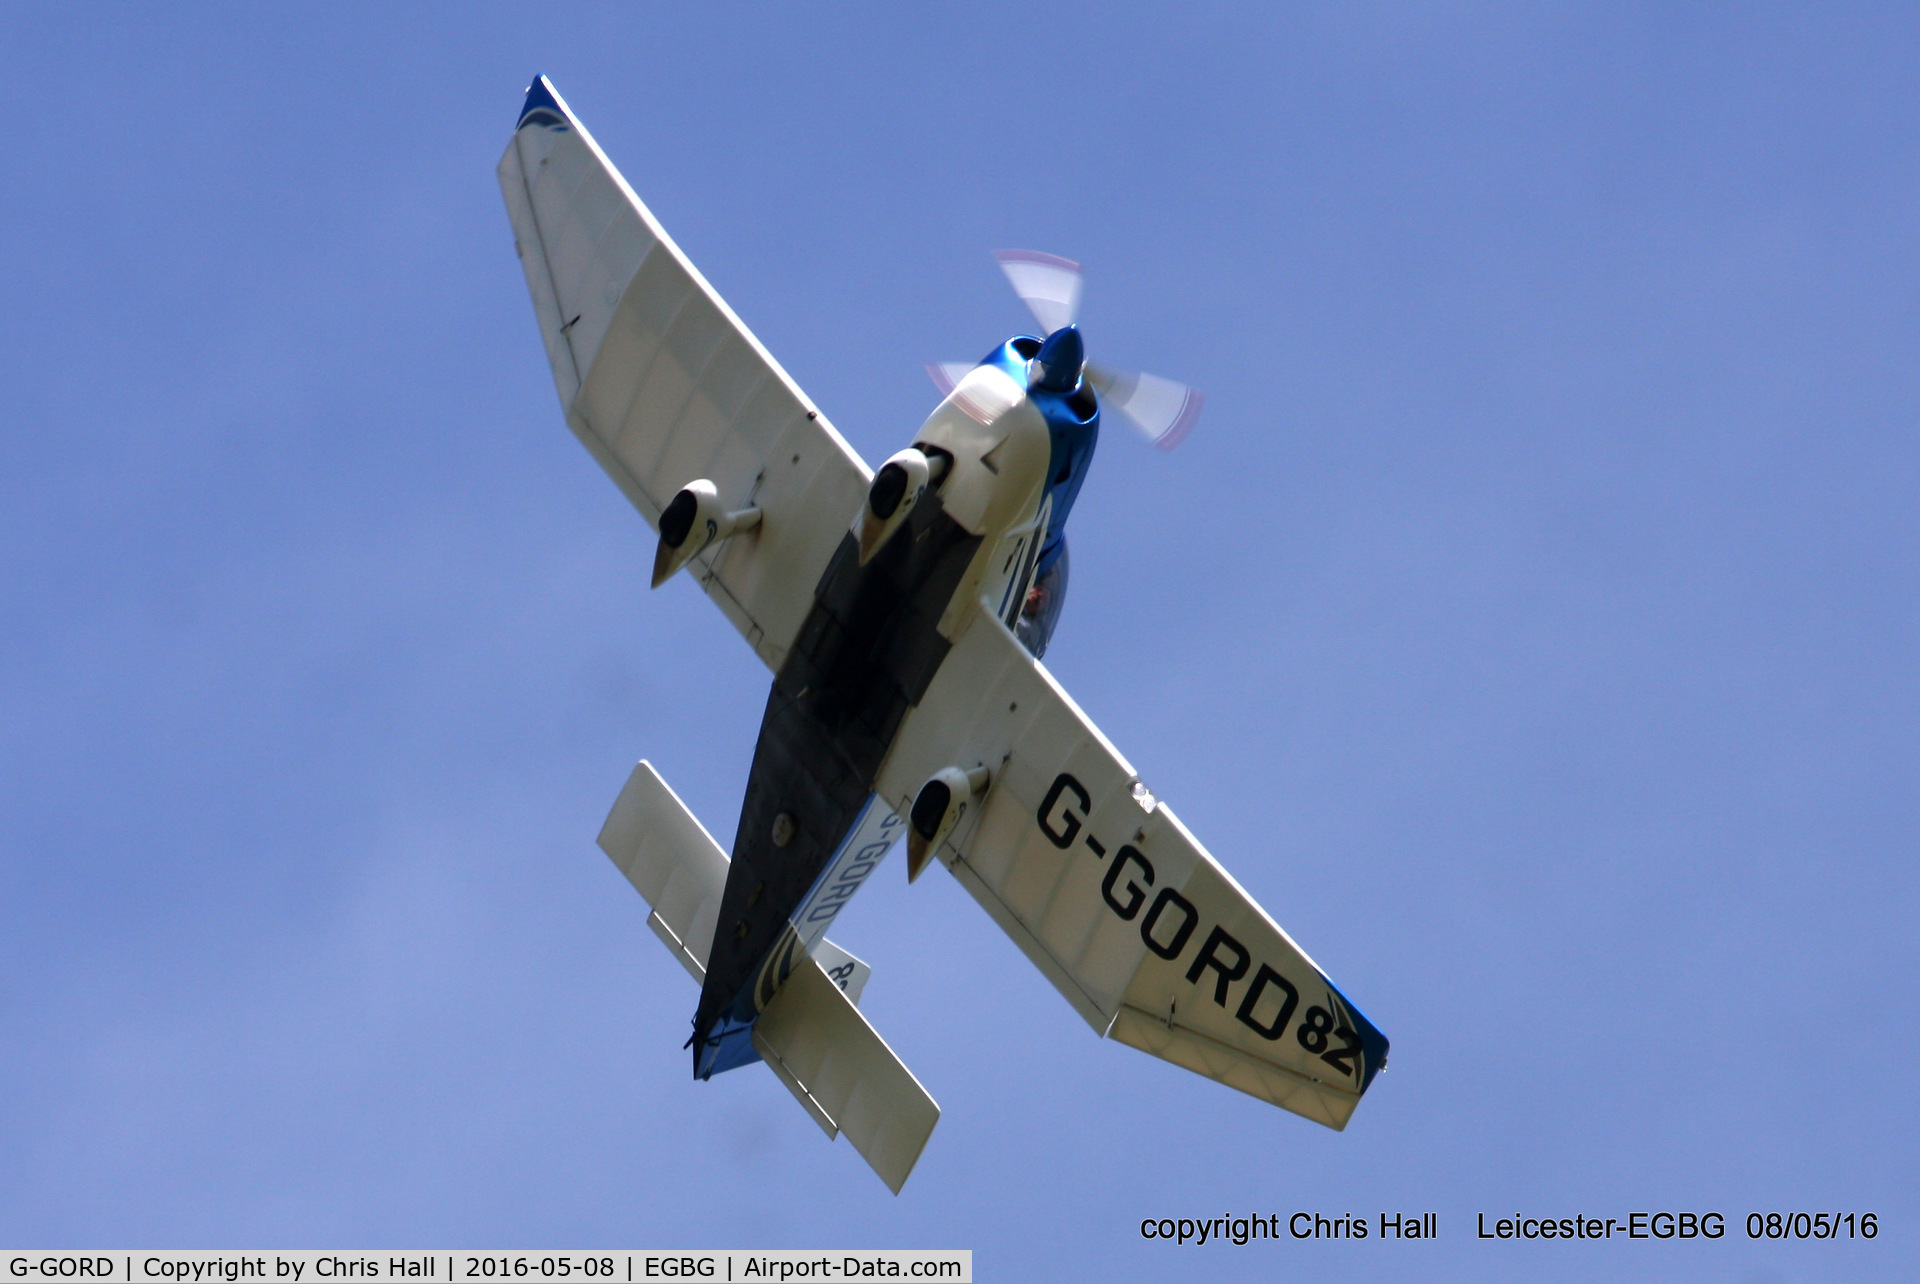 G-GORD, 2014 Robin DR-400-140B Major Major C/N 2669, Royal Aero Club air race at Leicester